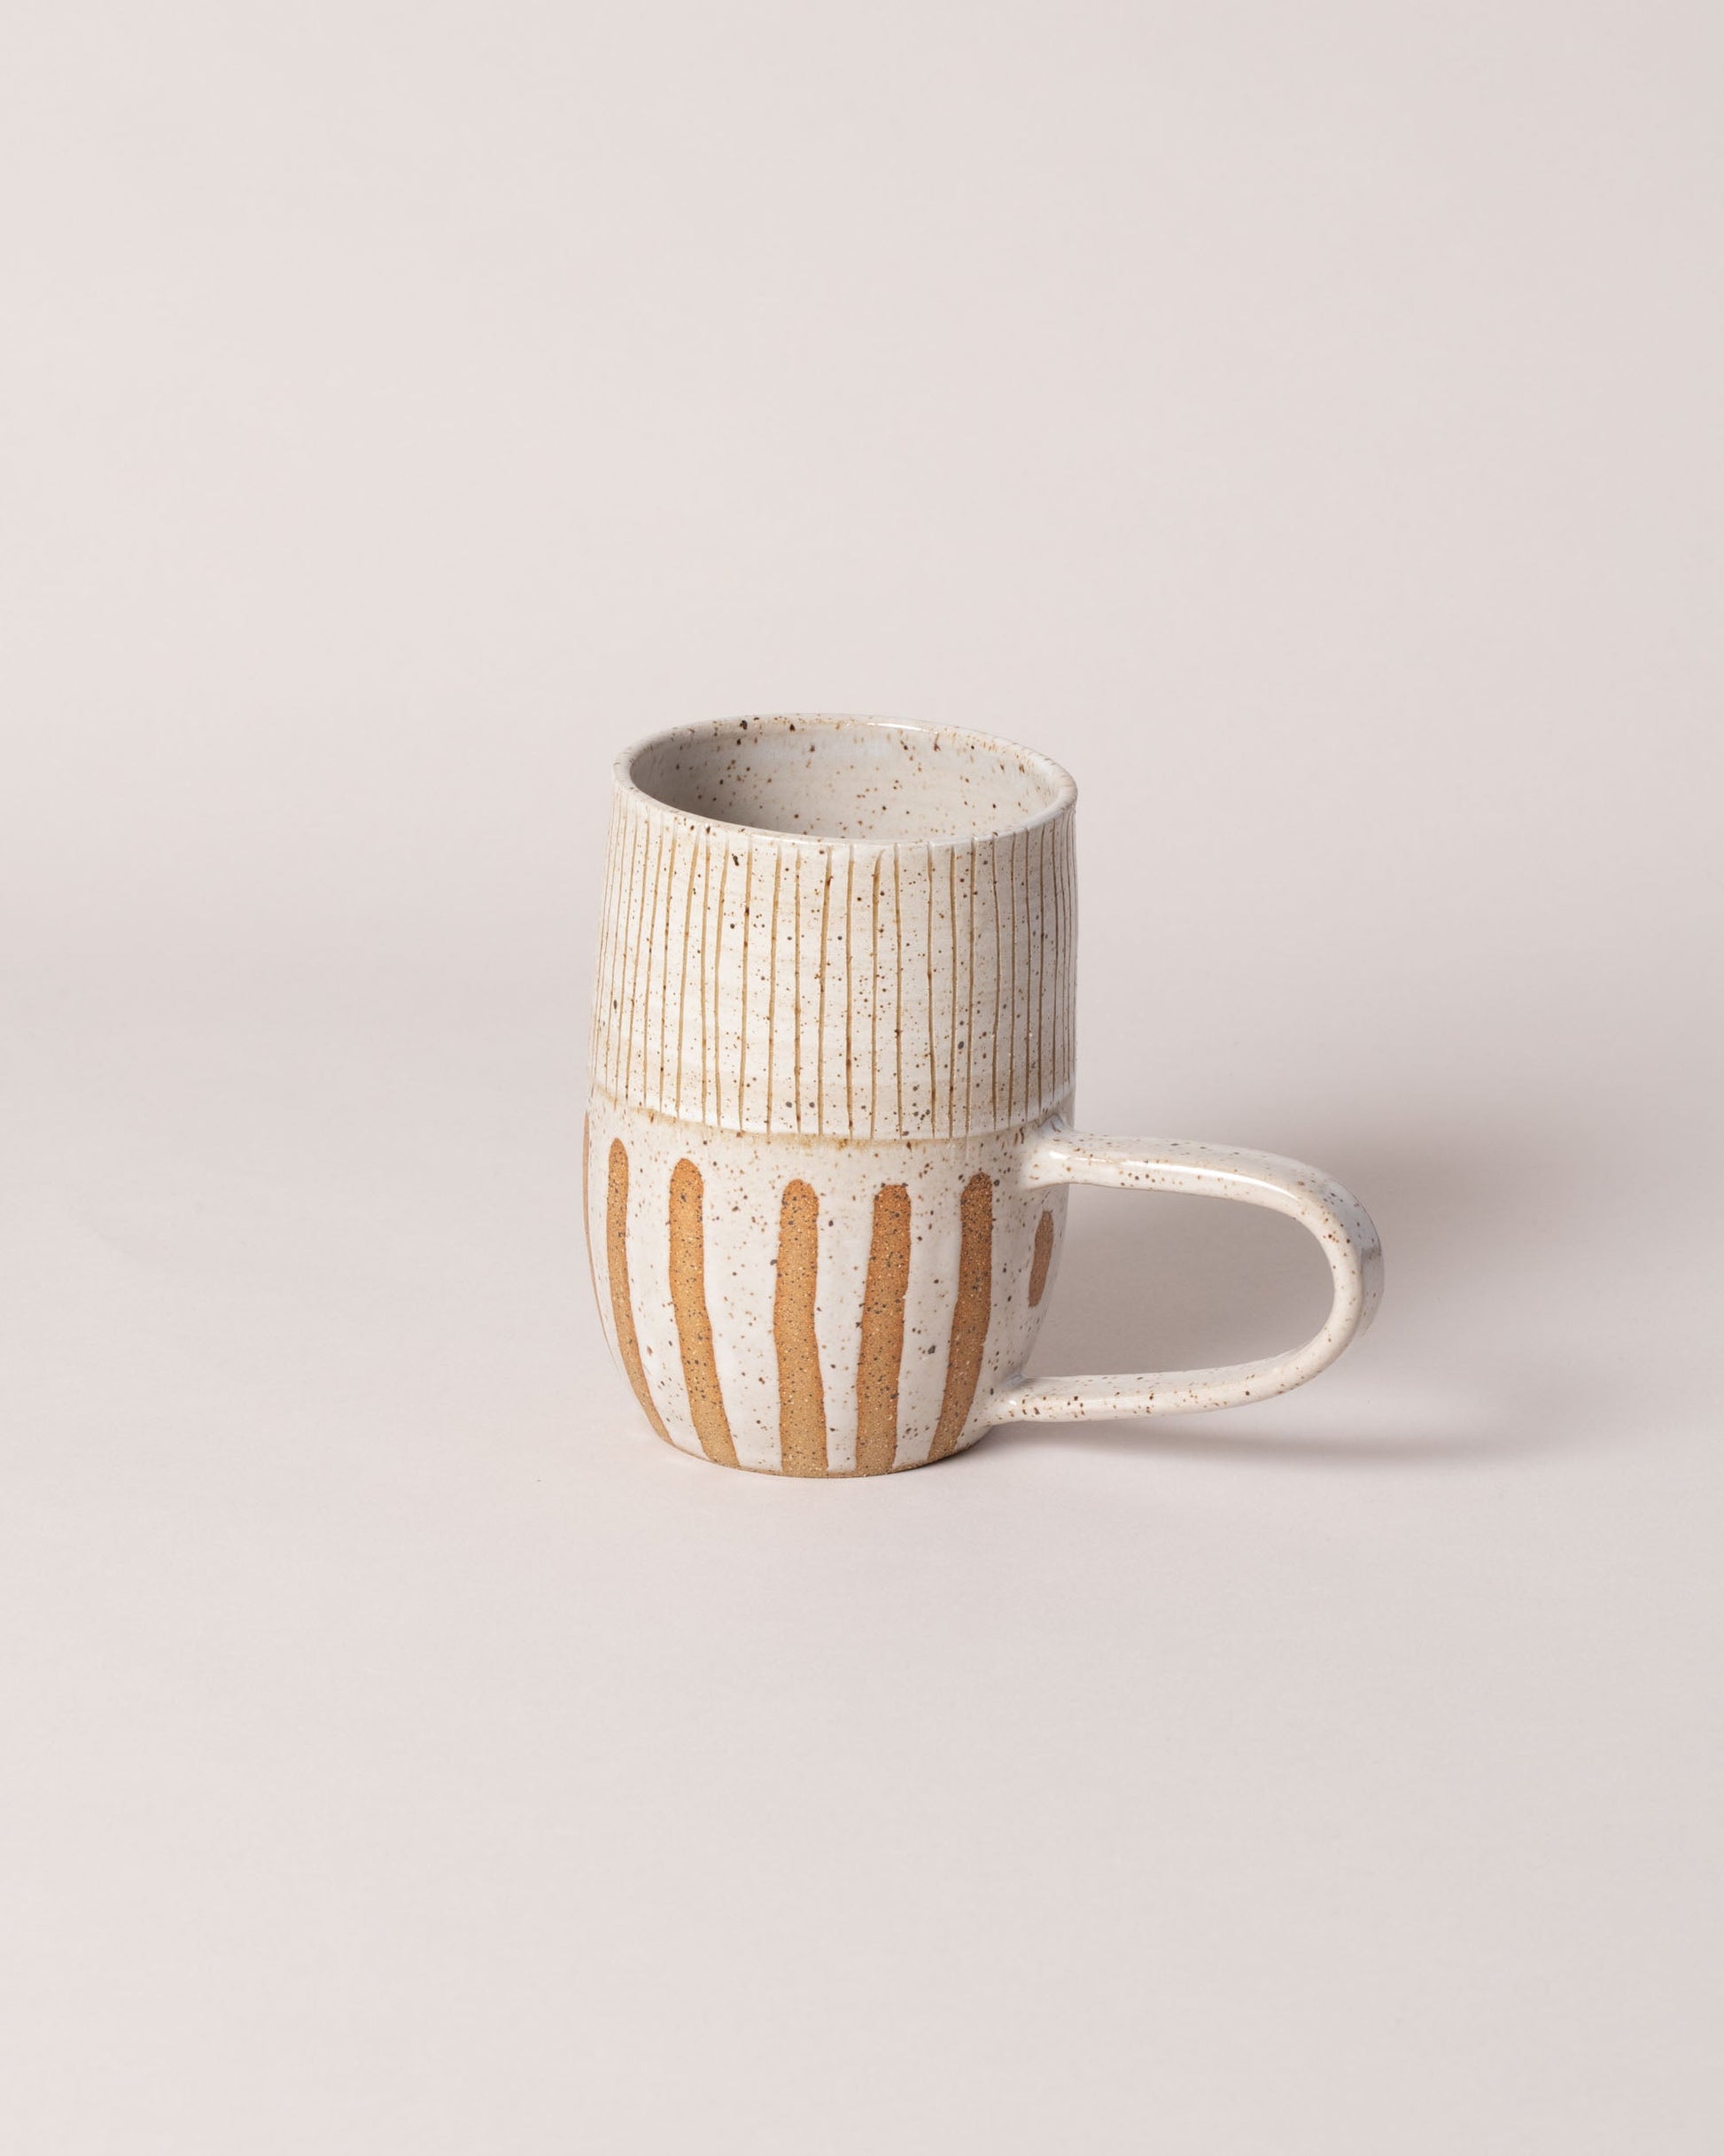  Little Bear Pots White Striped Mug on light color background.